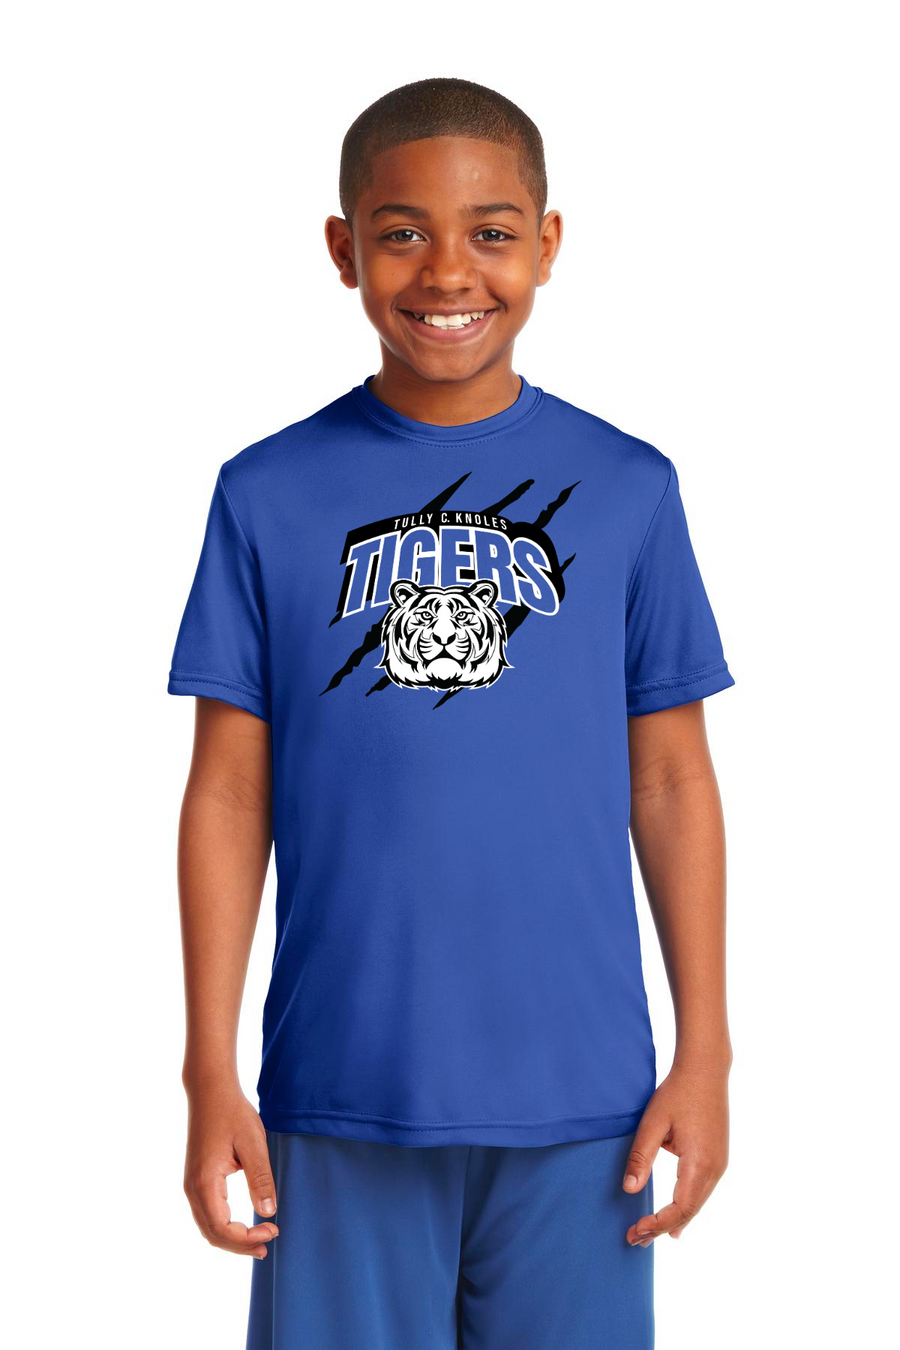 Tully C Knoles - Spirit Wear 23/24 On-Demand-Unisex Dry-Fit Shirt Tiger Logo